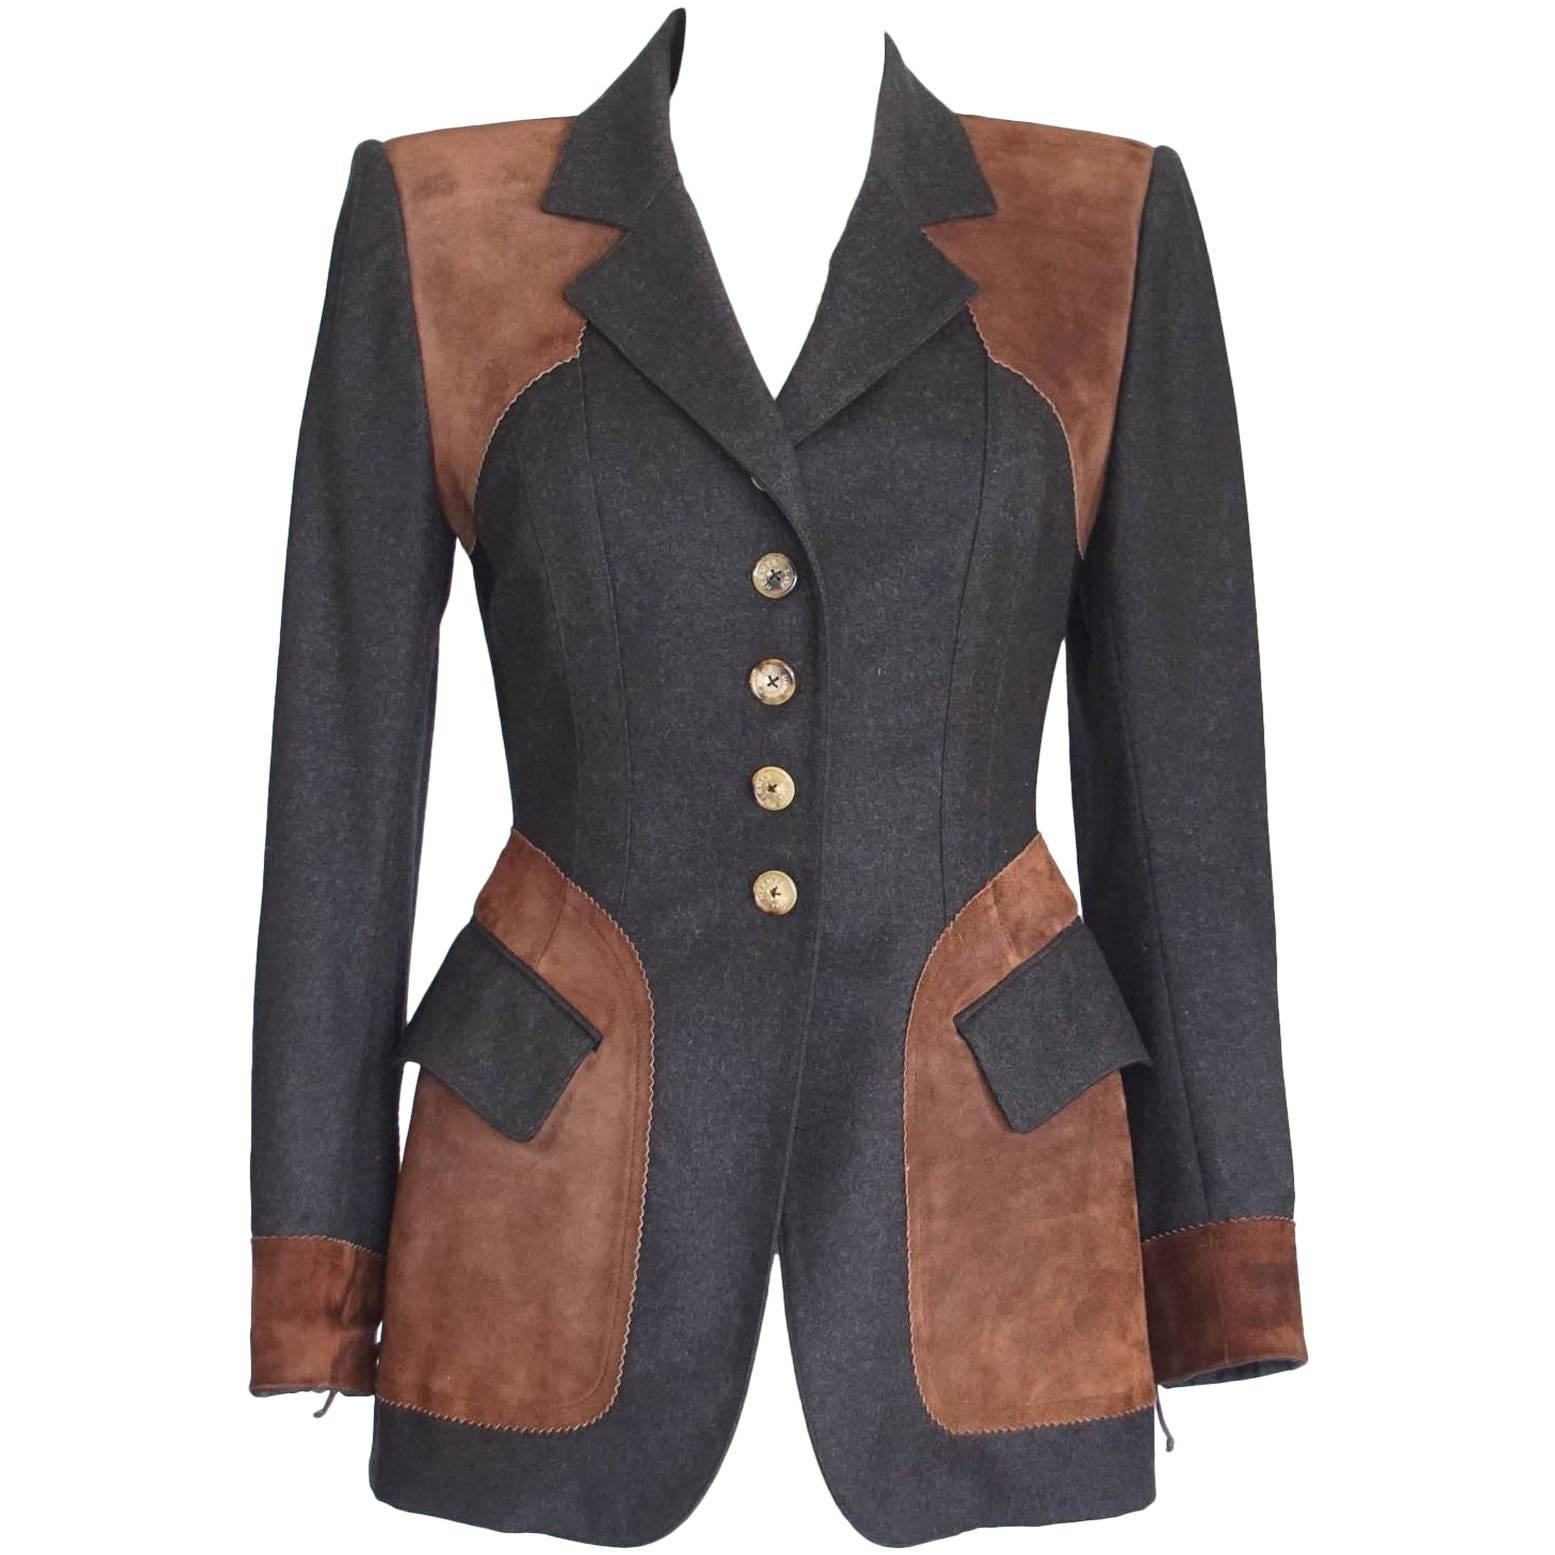 Hermes Jacket Striking Shape and Details in Wool and Suede Vintage  38 / 6